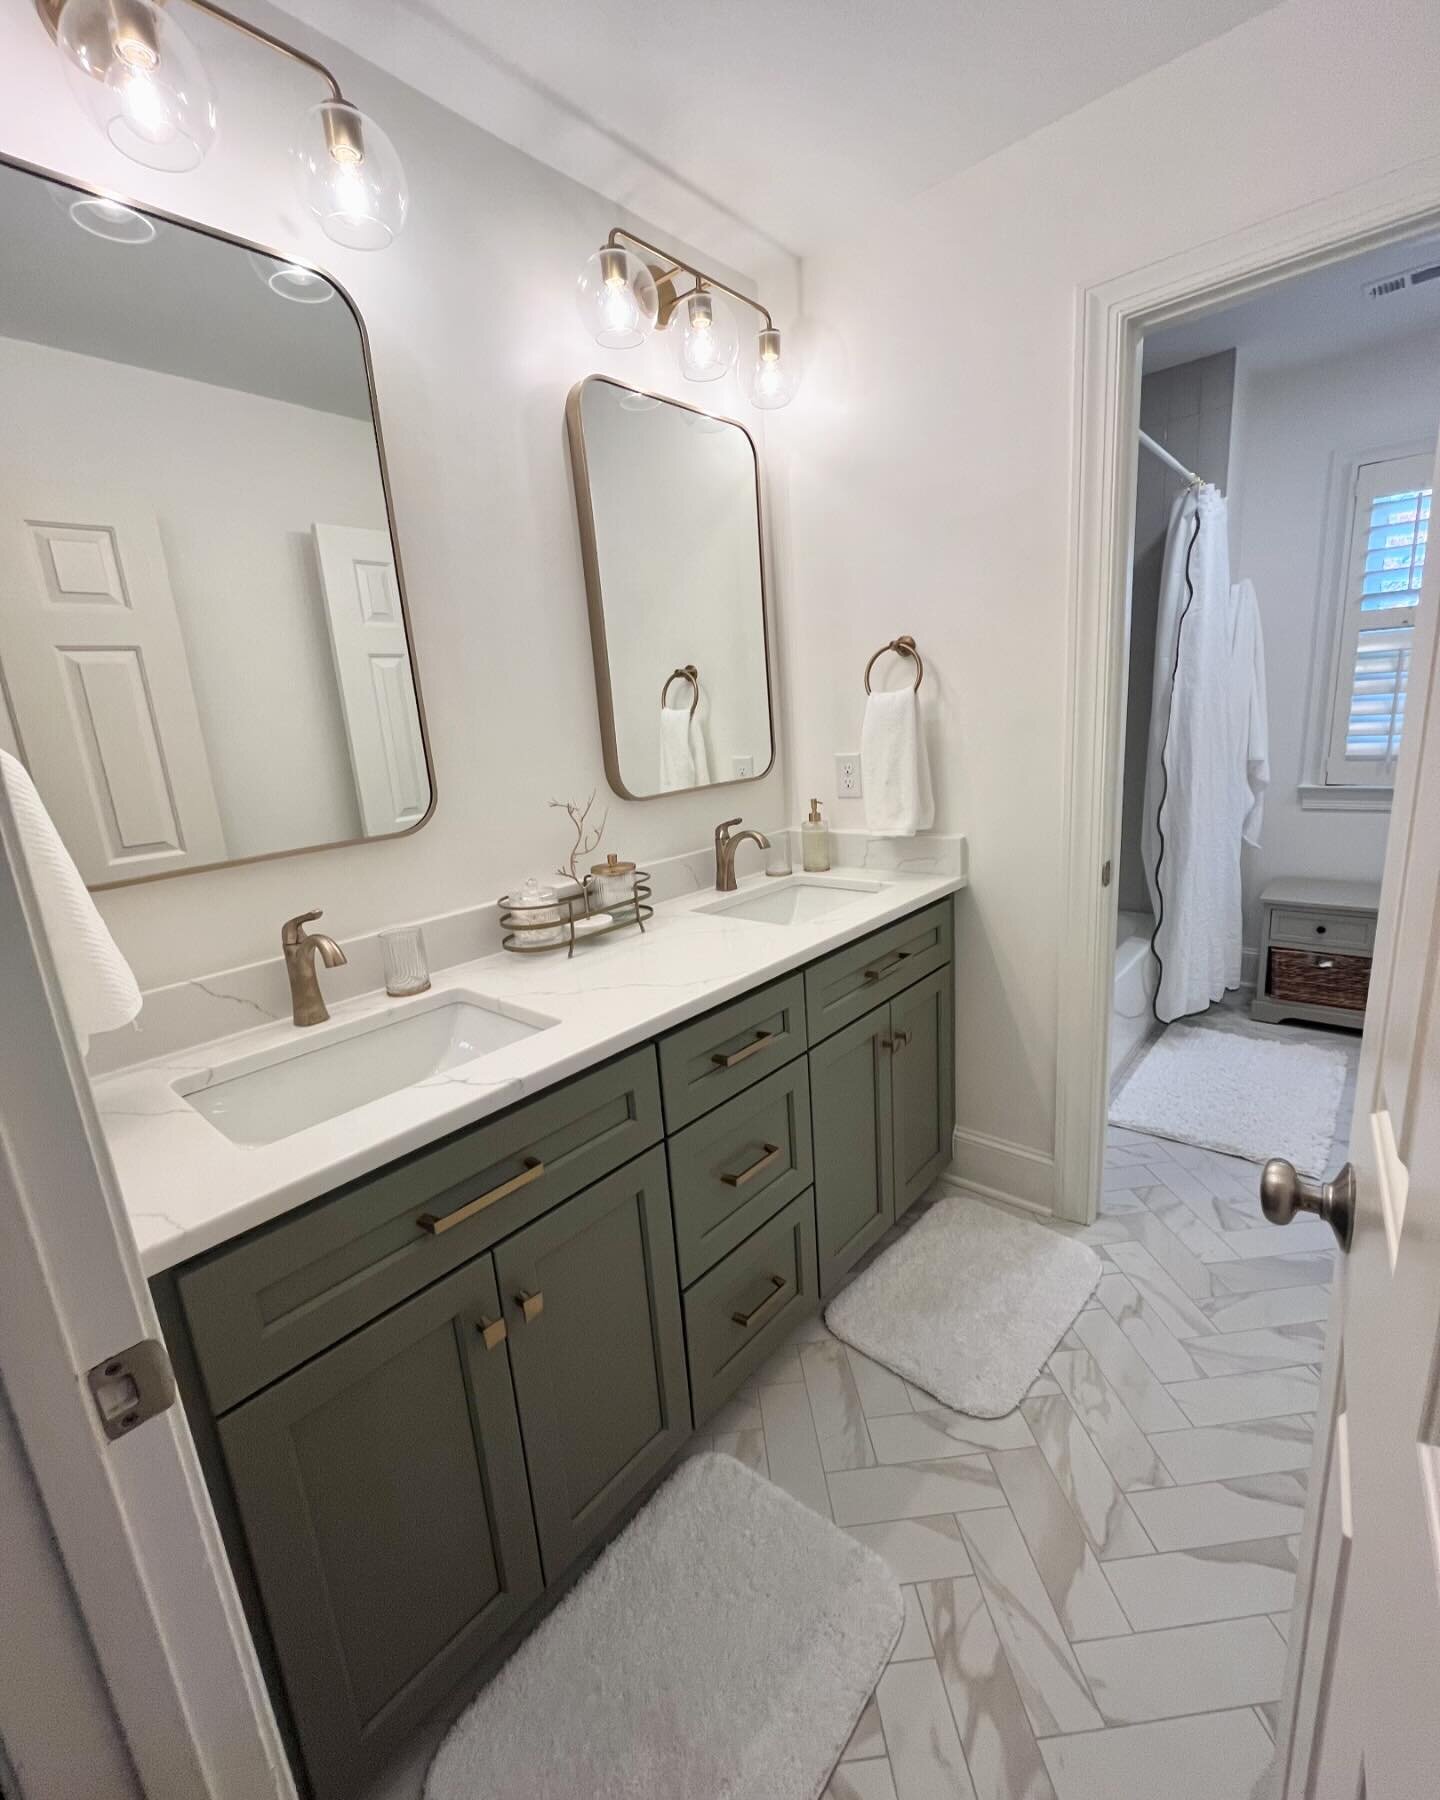 Another shell sink bathroom bites the dust! 🙌🏼🐚 We said goodbye to a worn out bathroom and helloooo to an updated vanity,  countertops, hardware, lighting, and tile! 

#bathroomremodel #bathroomrenovation #bathroomdesign #tiledesign #interiordesig